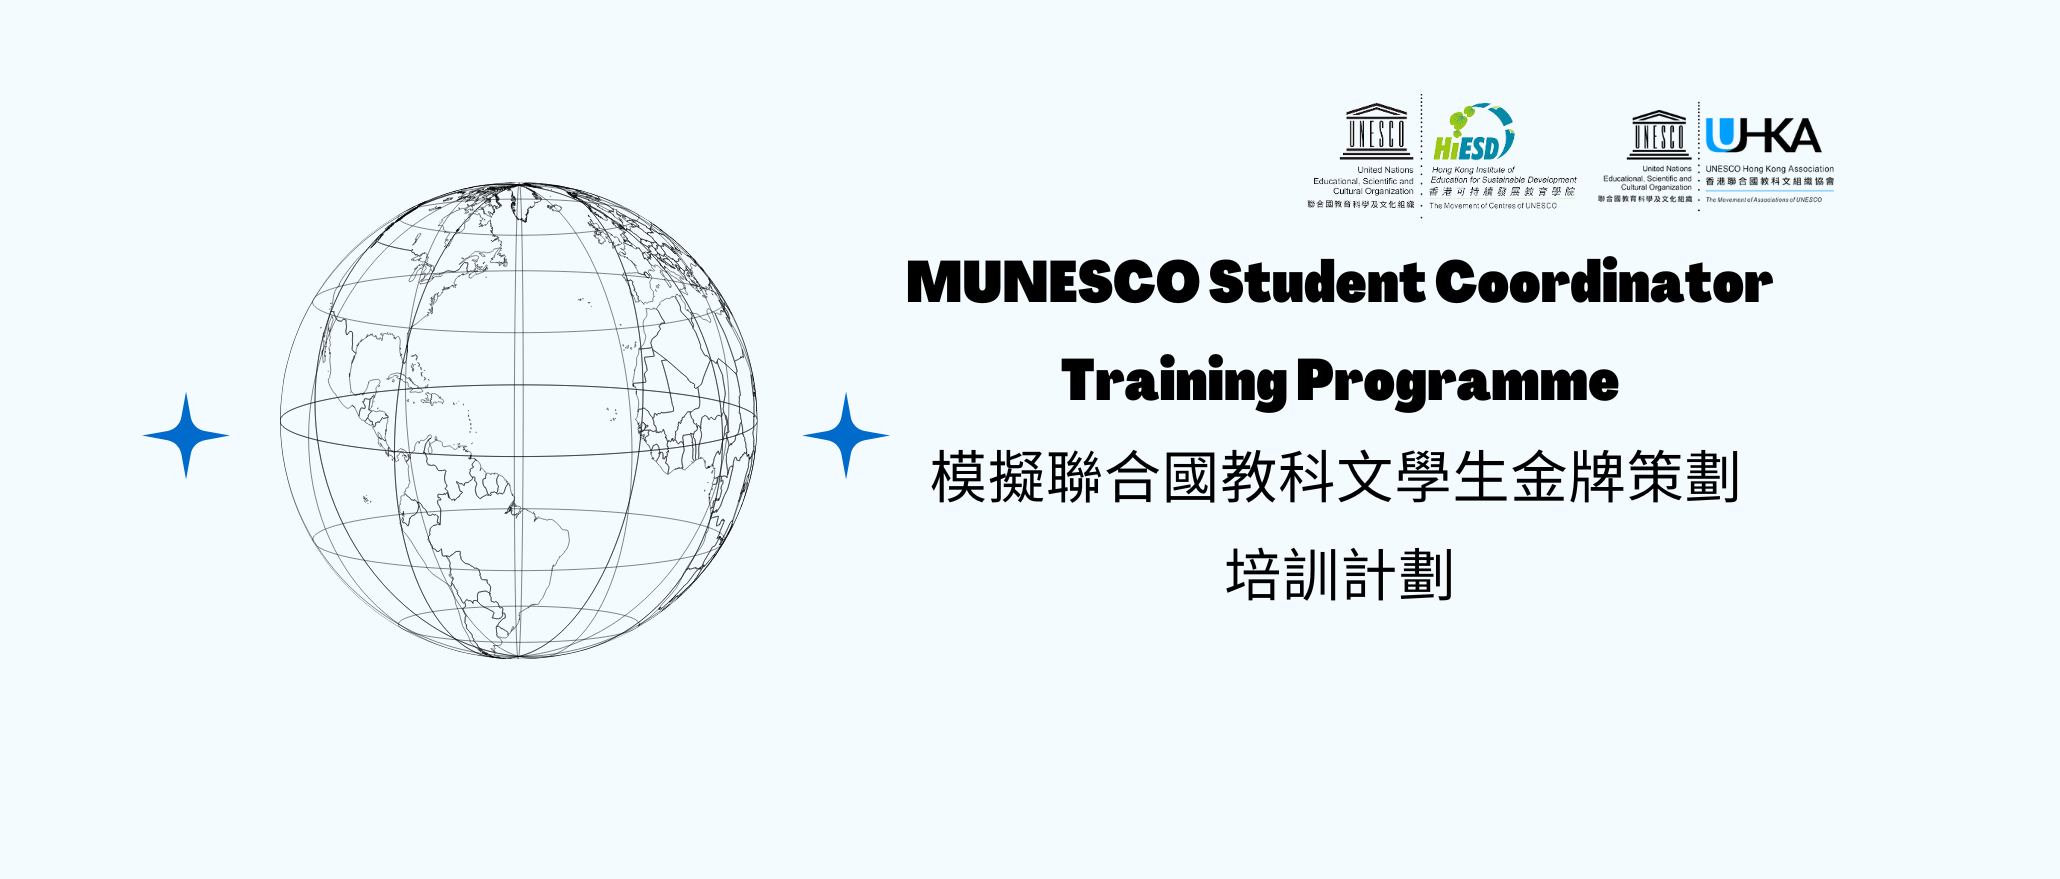 MUNESCO Student Coordinator Training